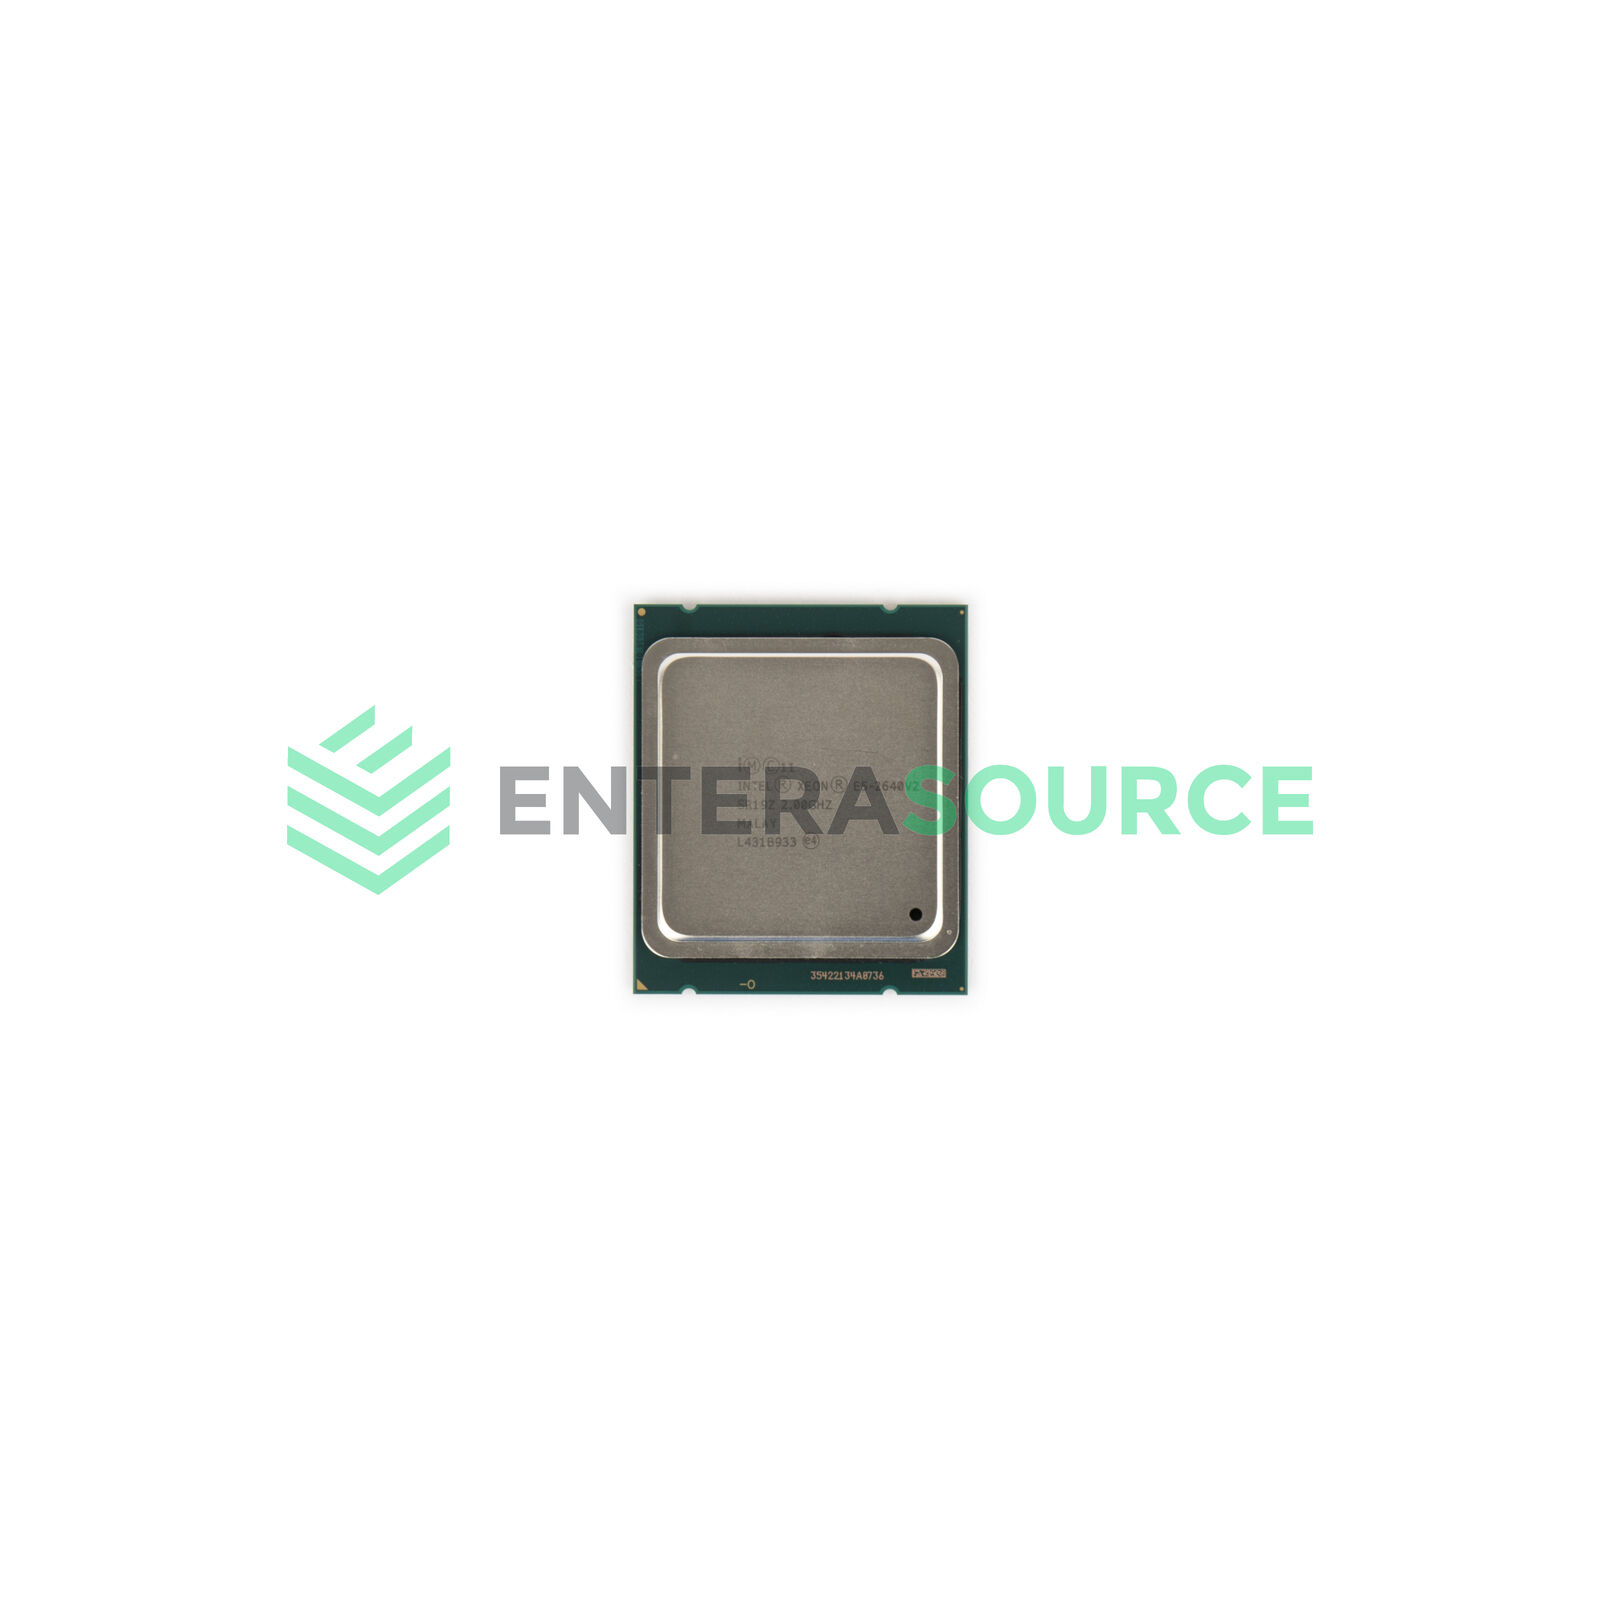 Intel Xeon E5-2640 v2 2.0GHz 8 Core 20MB 7.2GT/s 95W Processor SR19Z